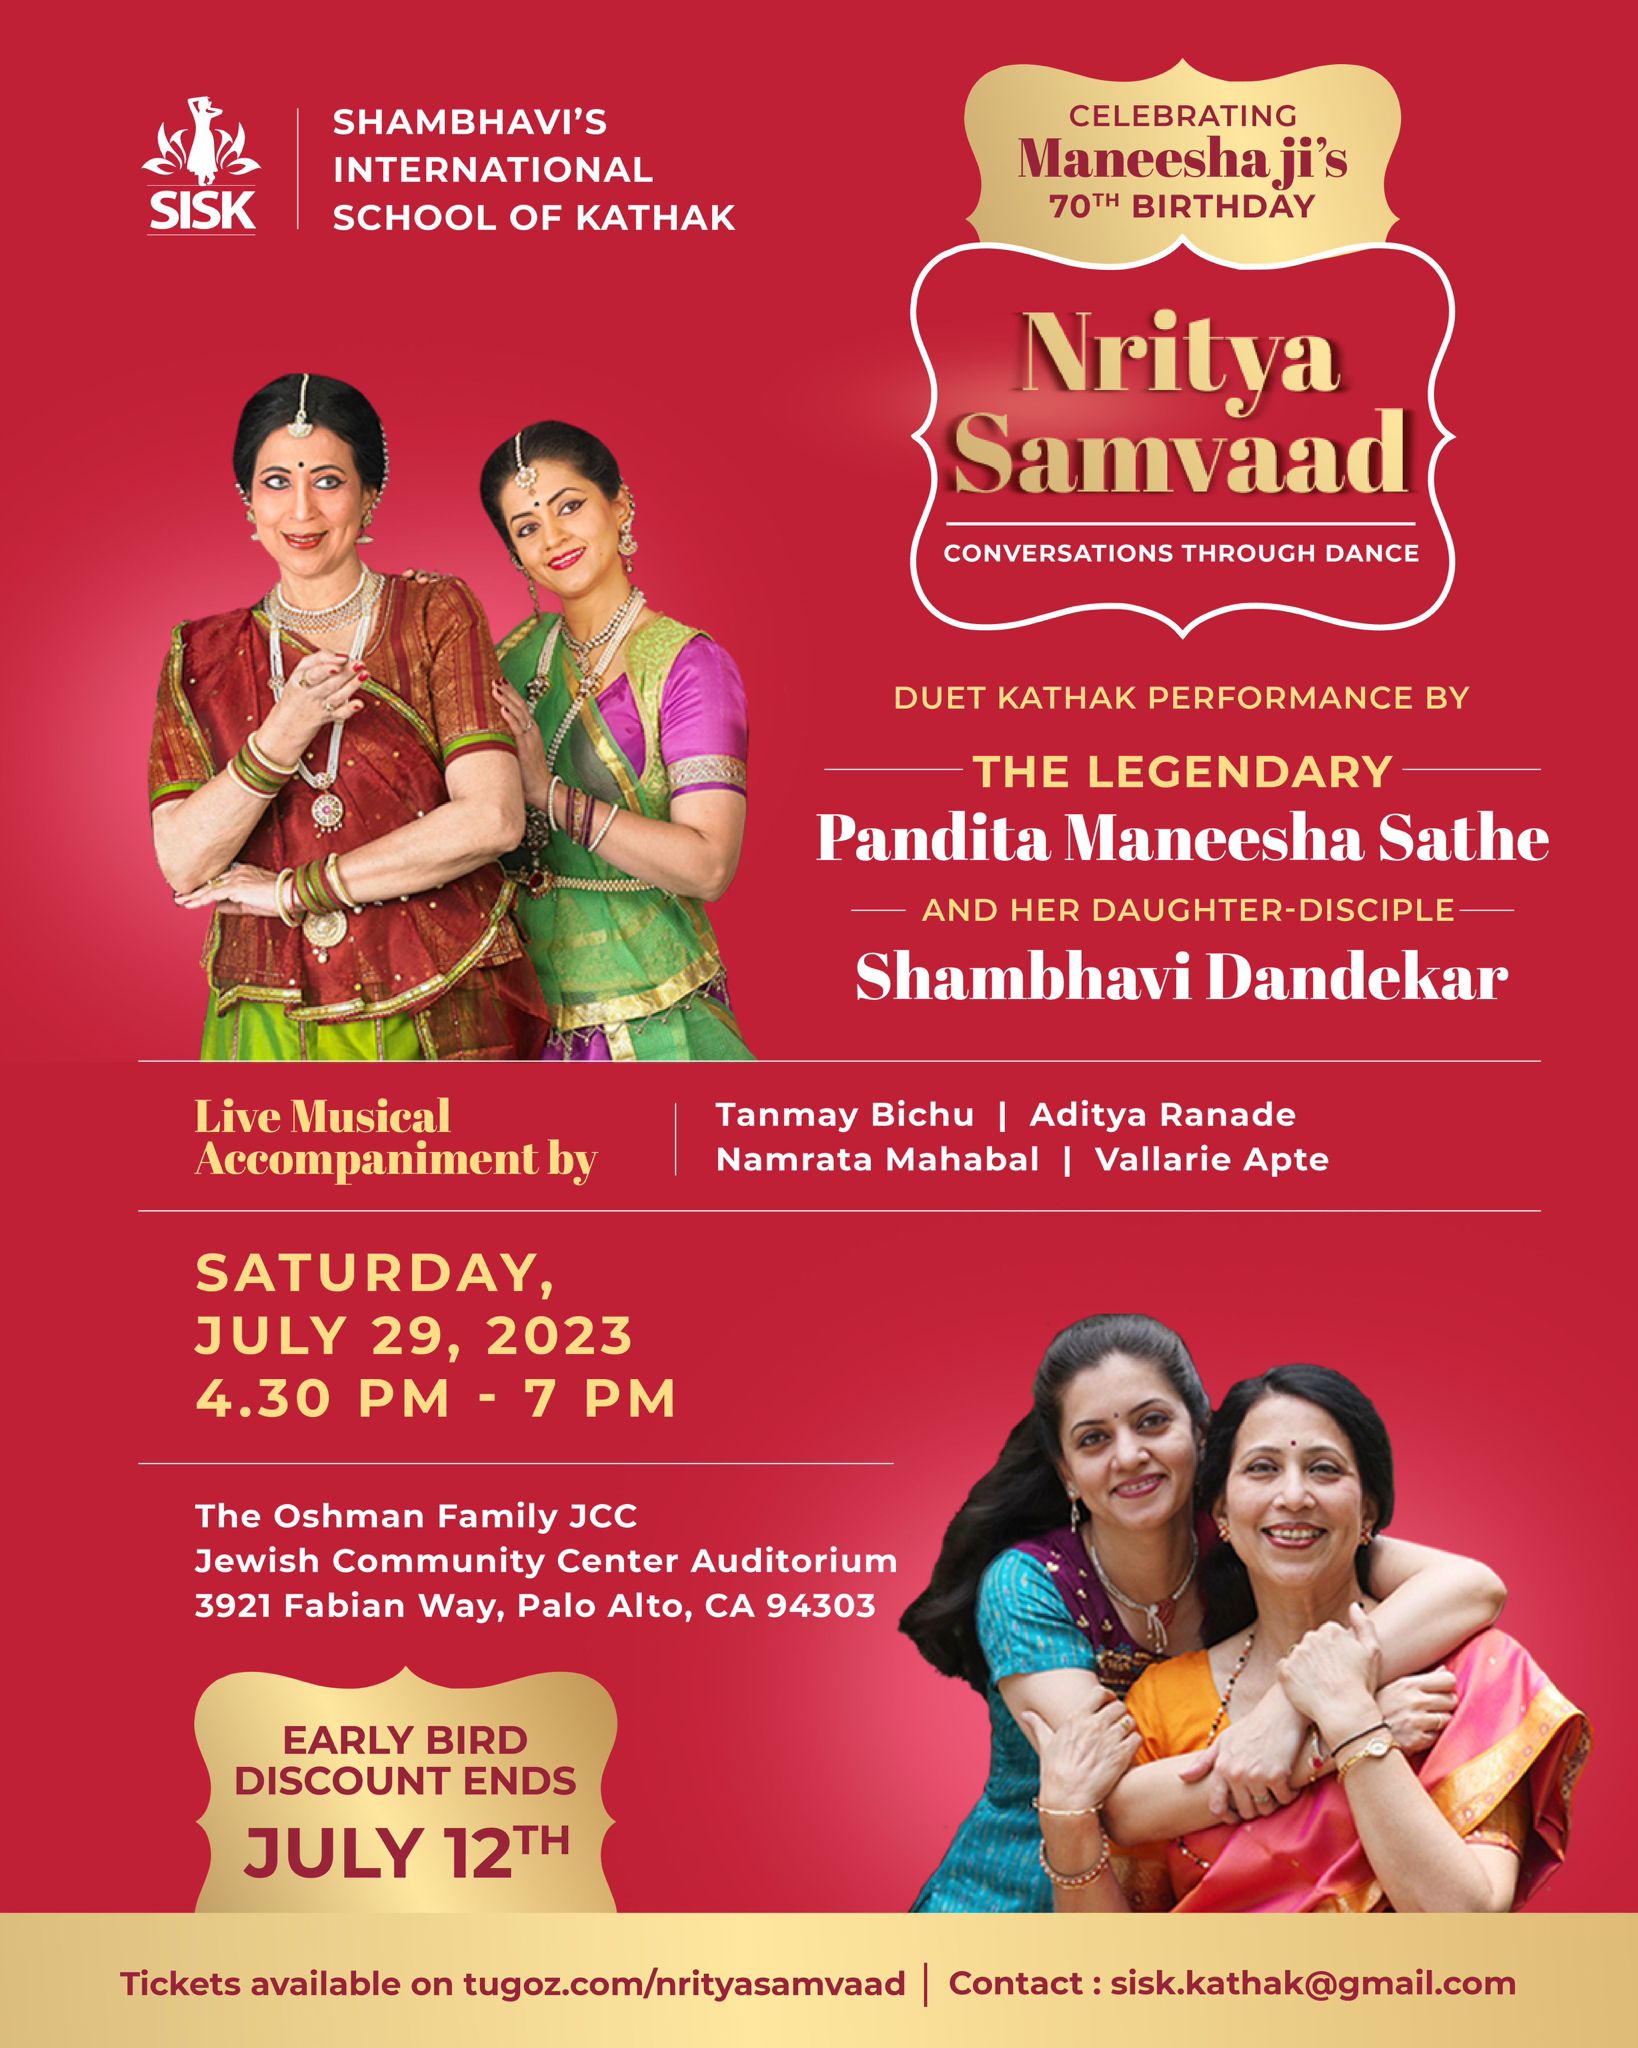 Nritya Samvaad - Conversations Through Dance